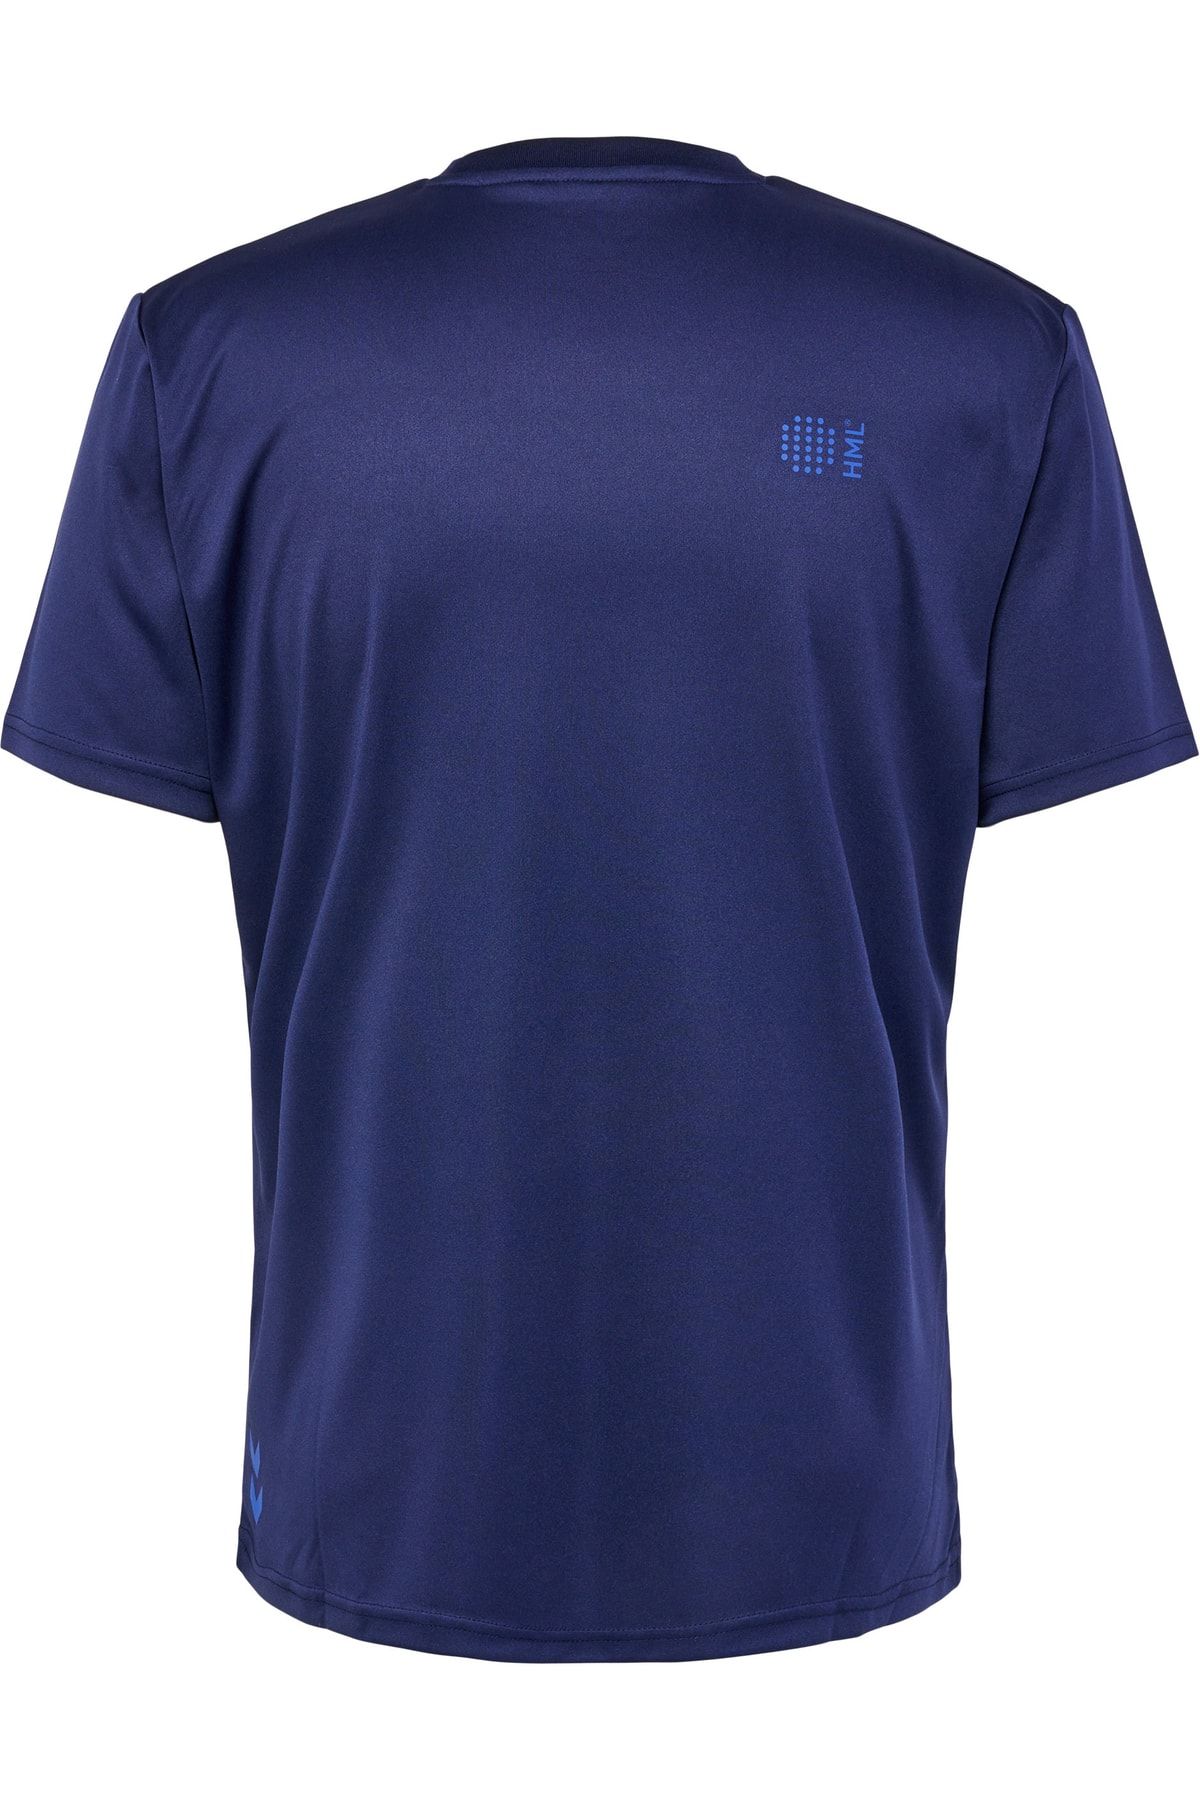 HUMMEL T-Shirt - Blau - Regular - Fit Trendyol